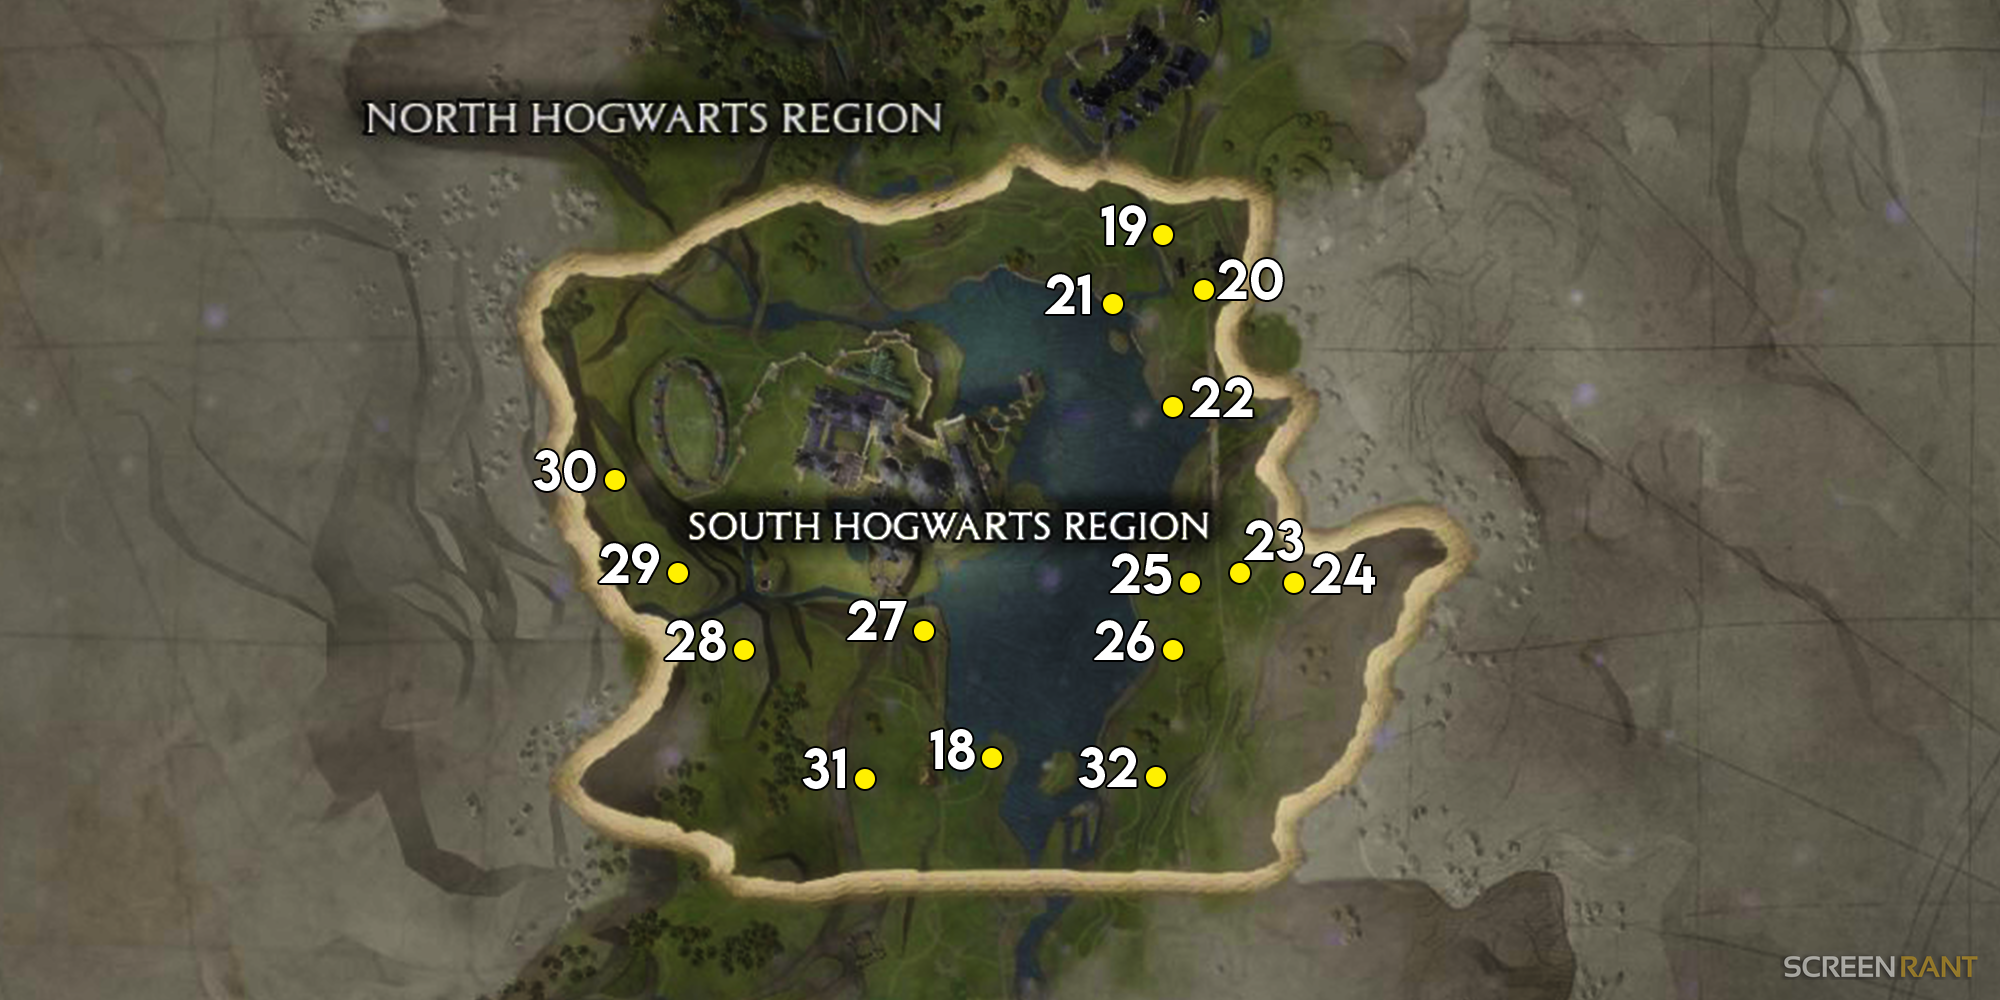 south hogwarts region merlin trials locations and solutions